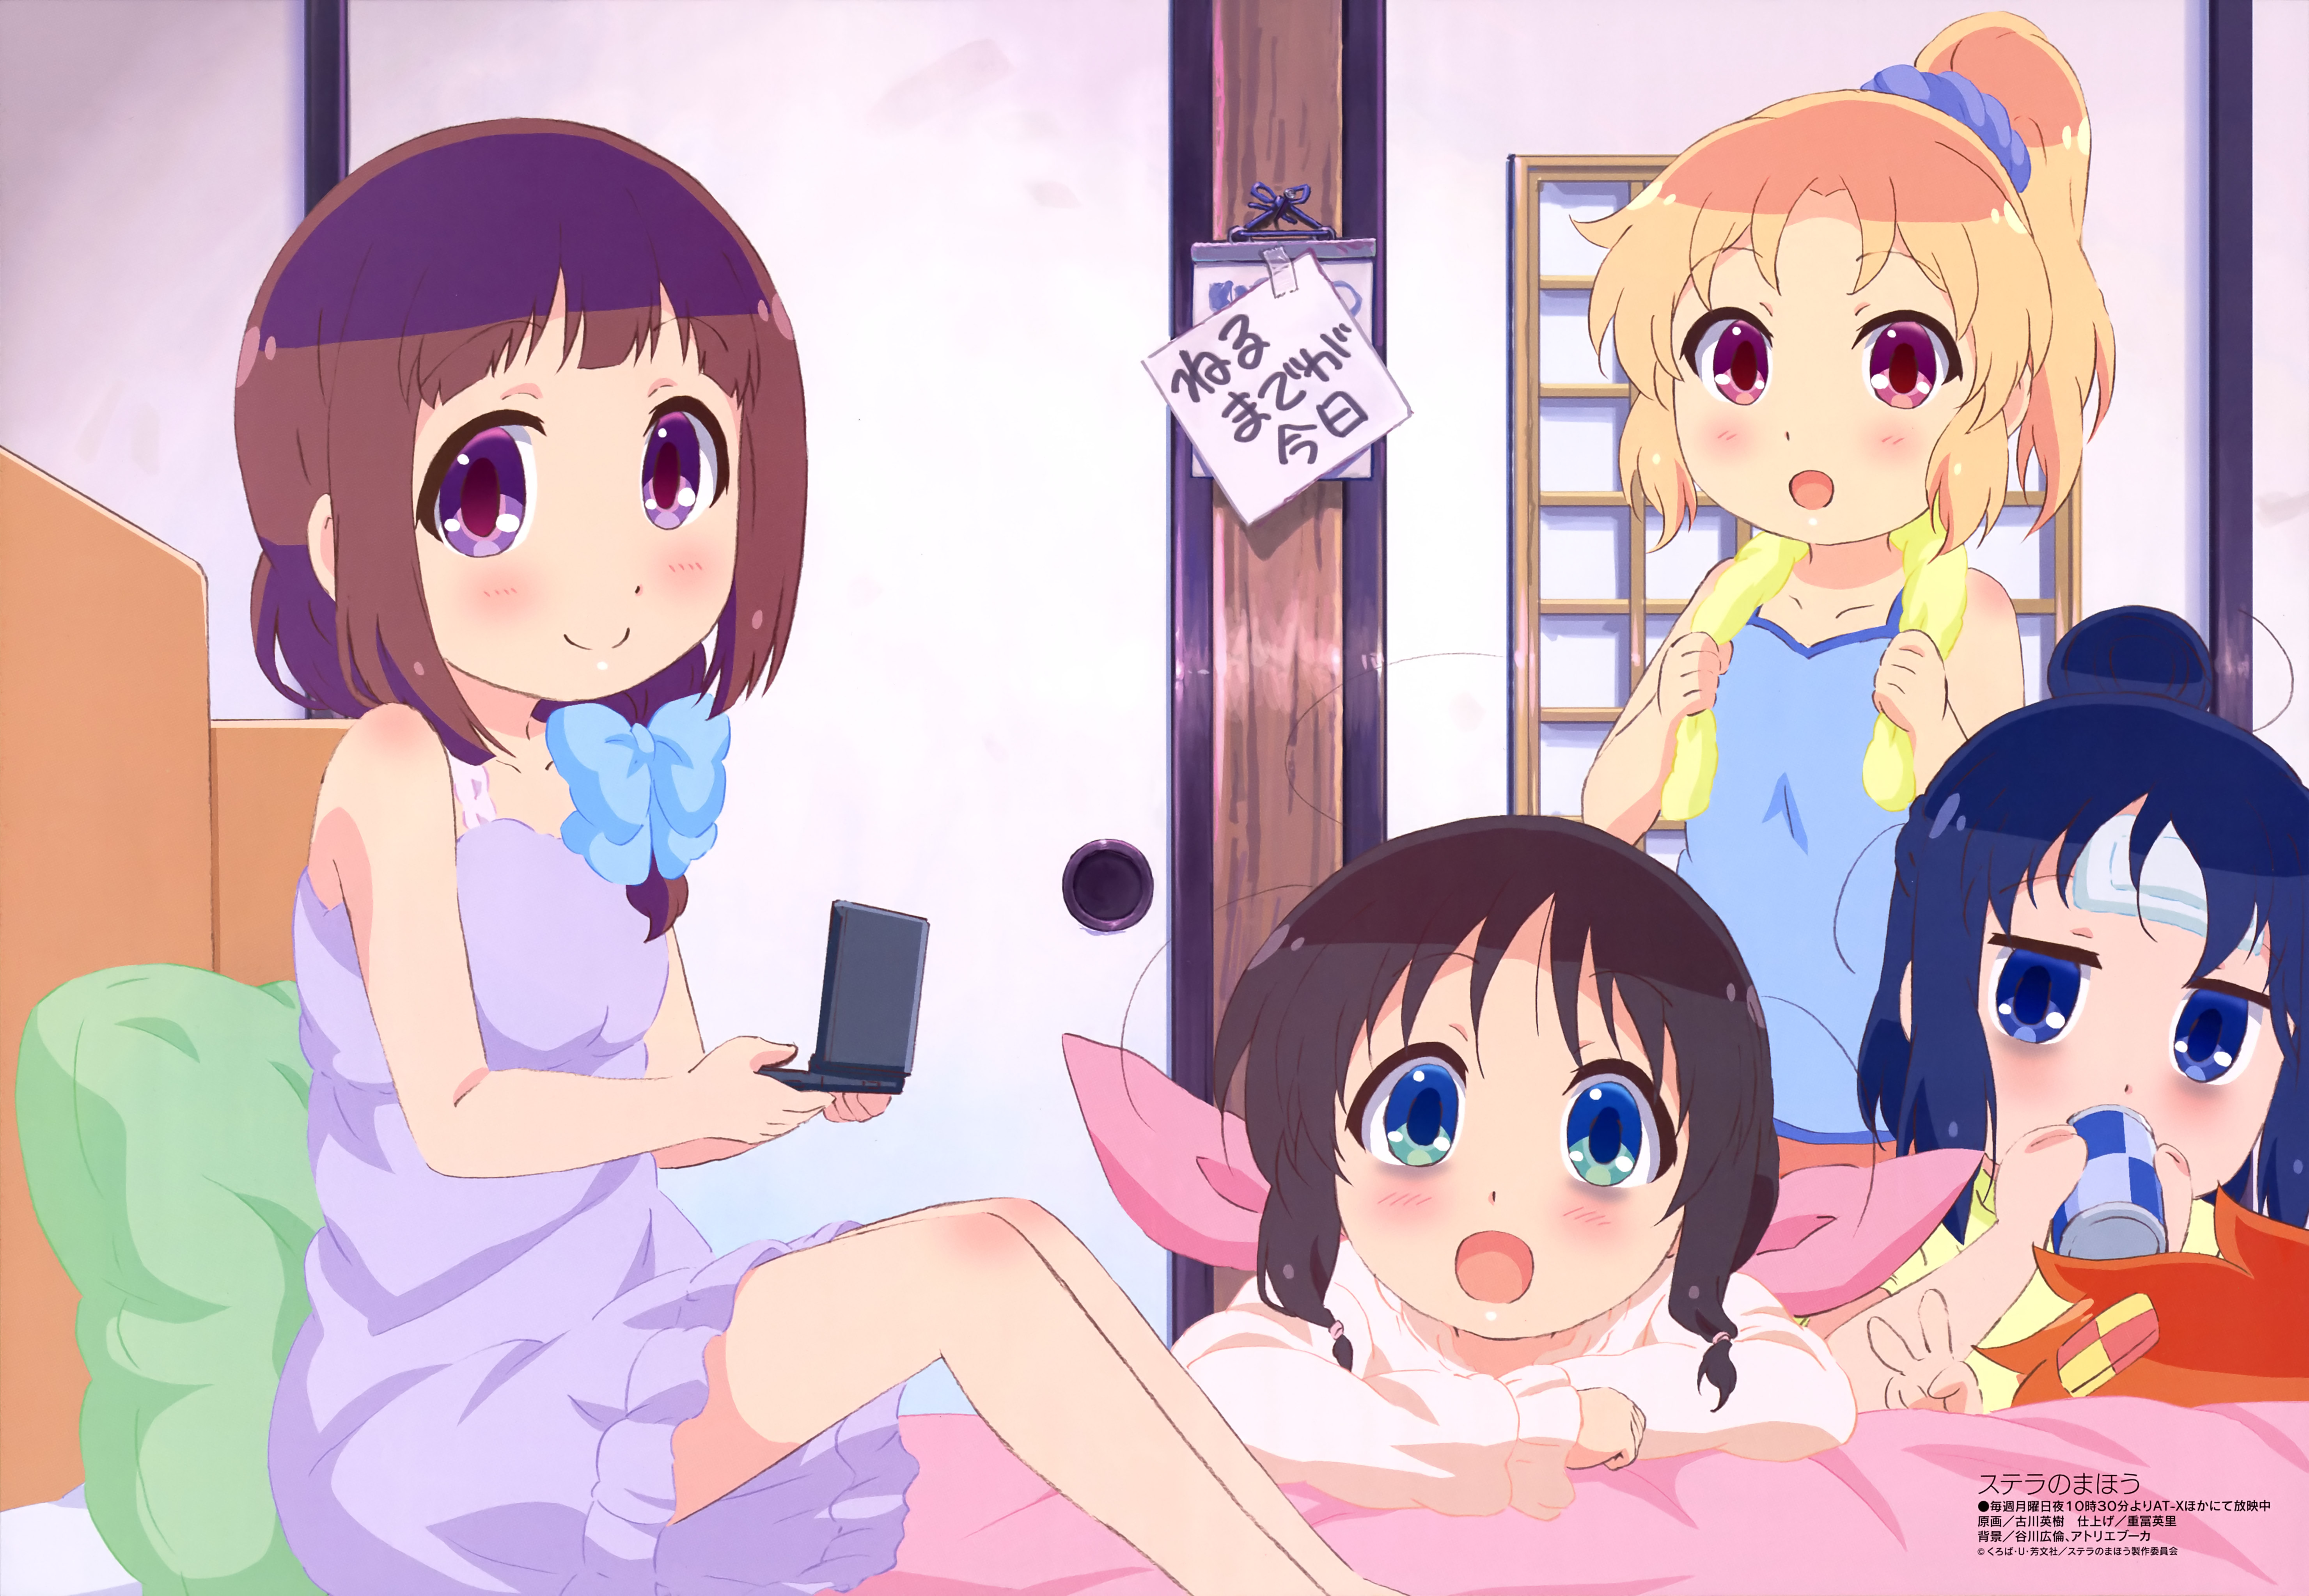 Anime Magic of Stella HD Wallpaper | Background Image